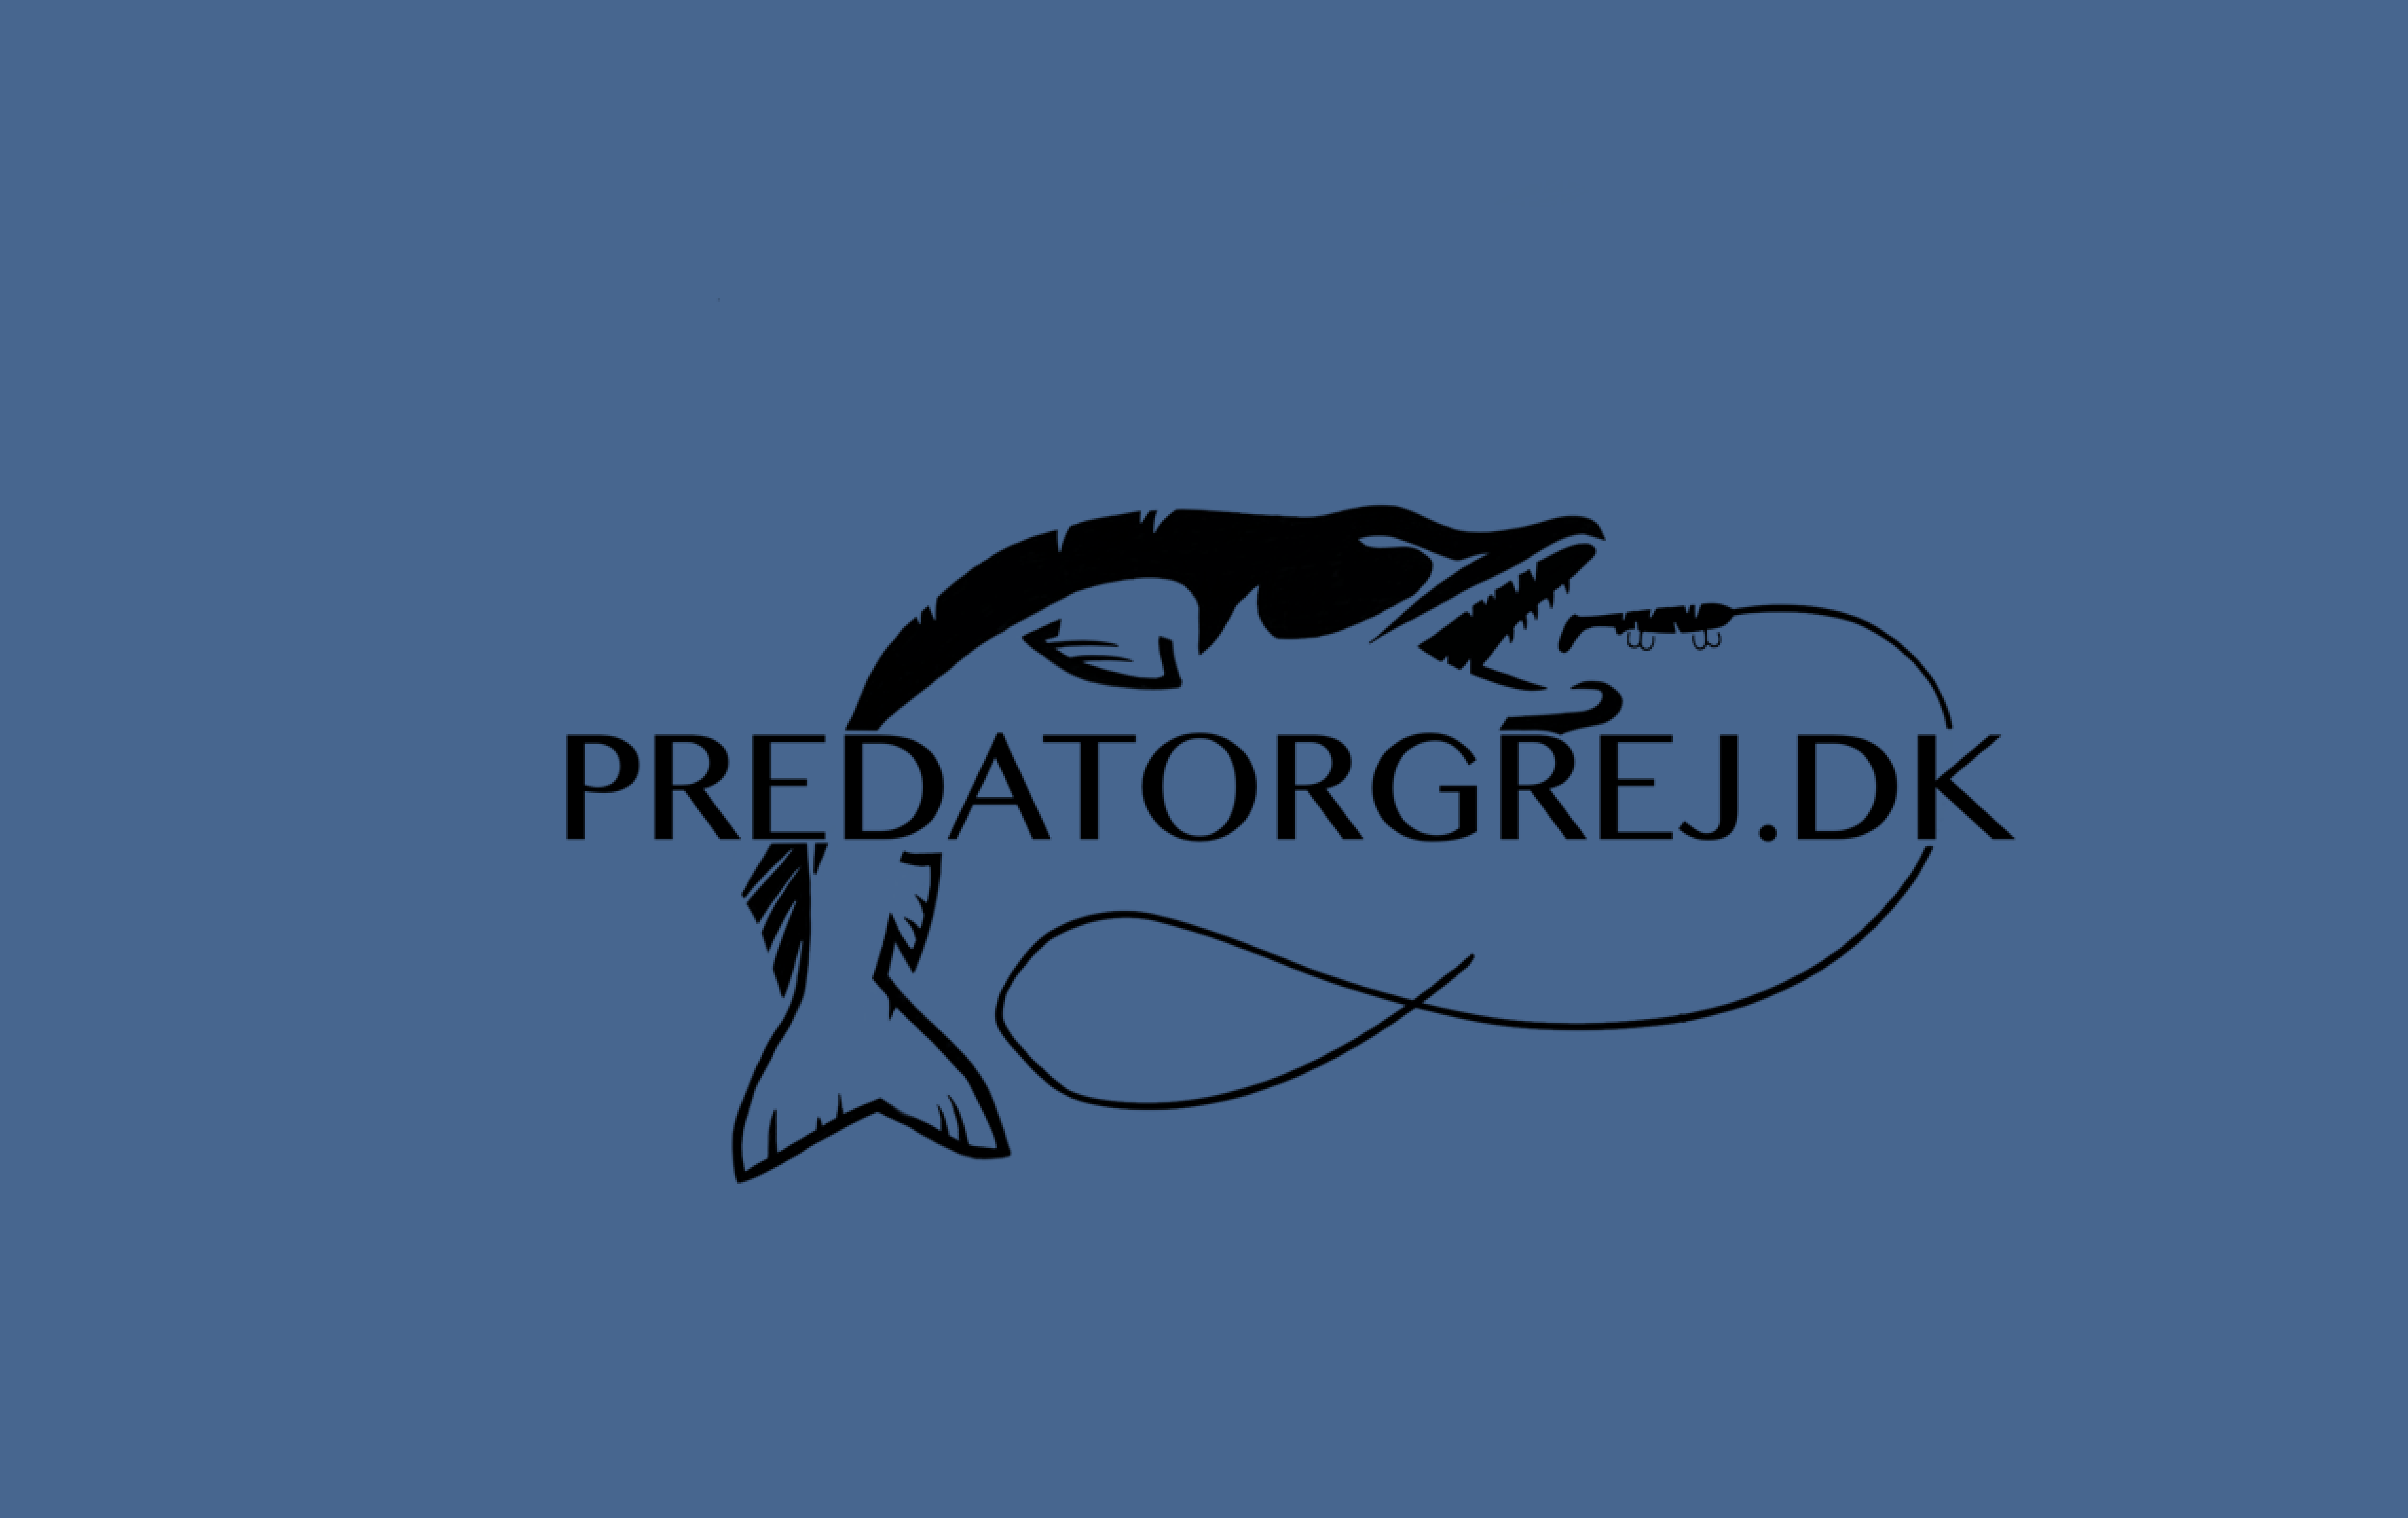 Predatorgrej.dk